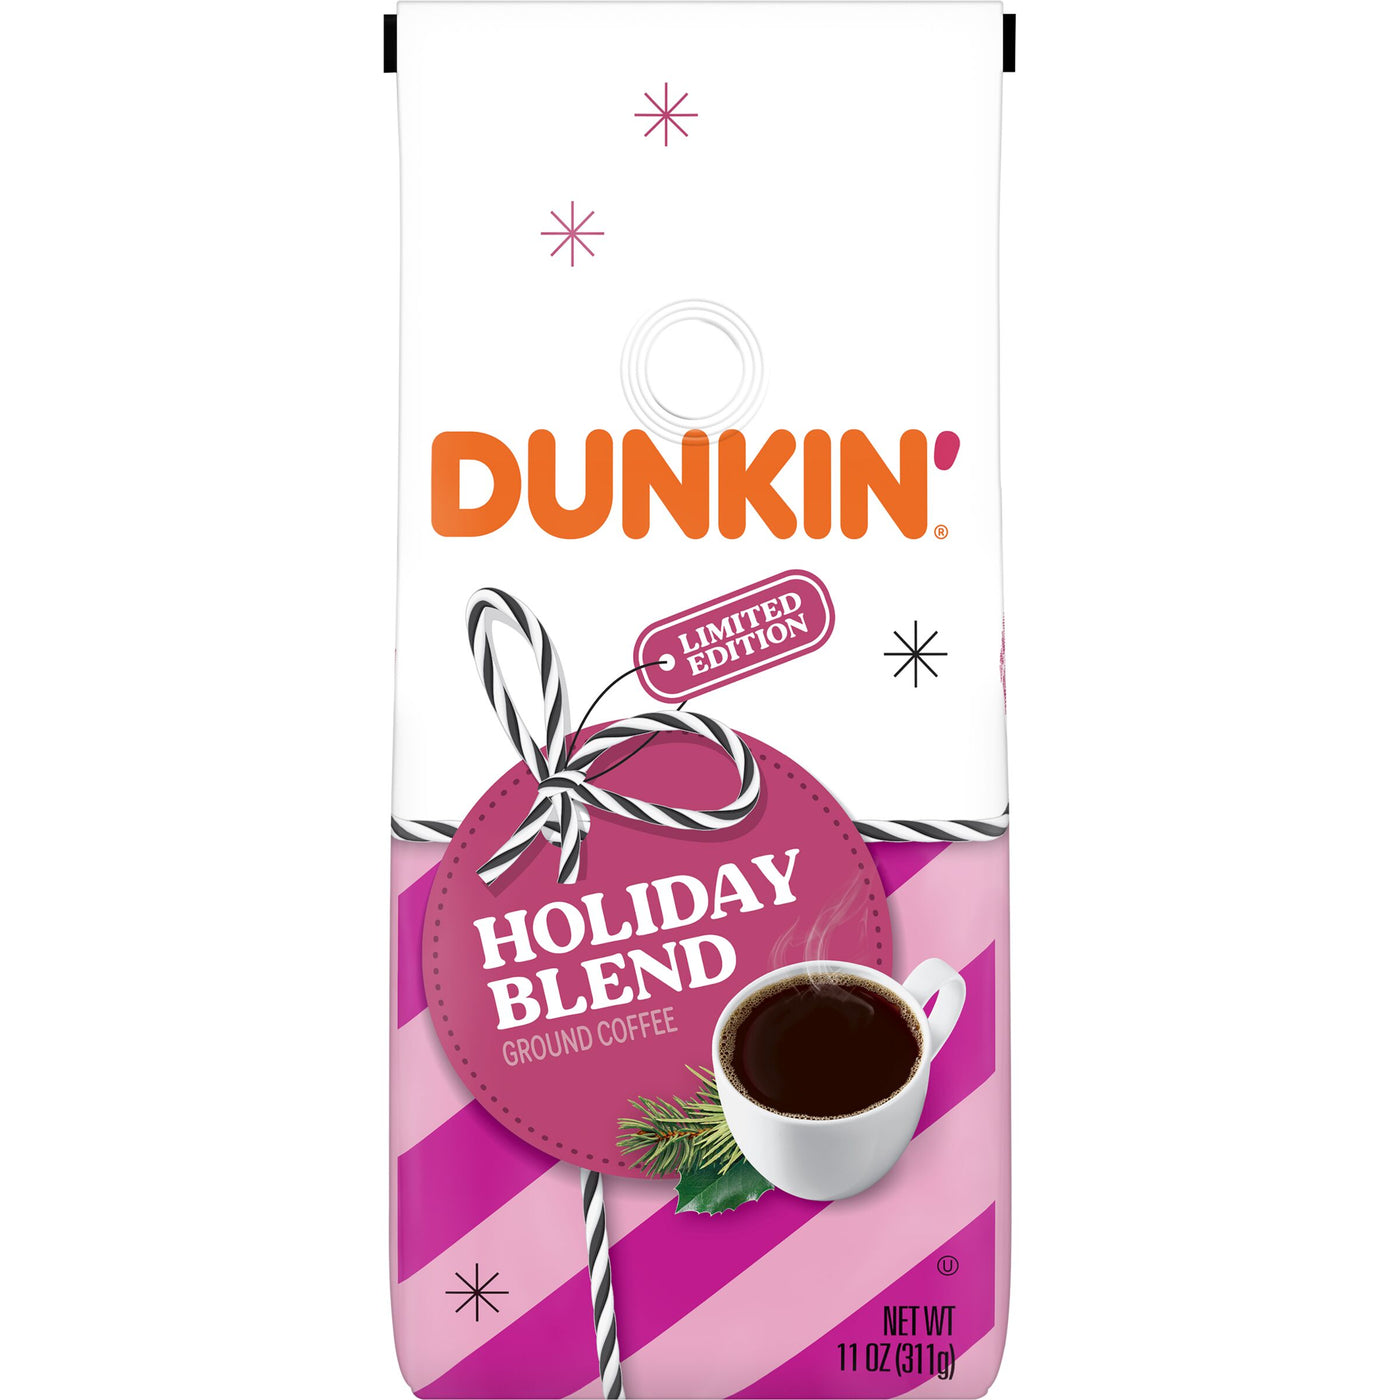 Dunkin' Holiday Blend Ground Coffee, 11 oz